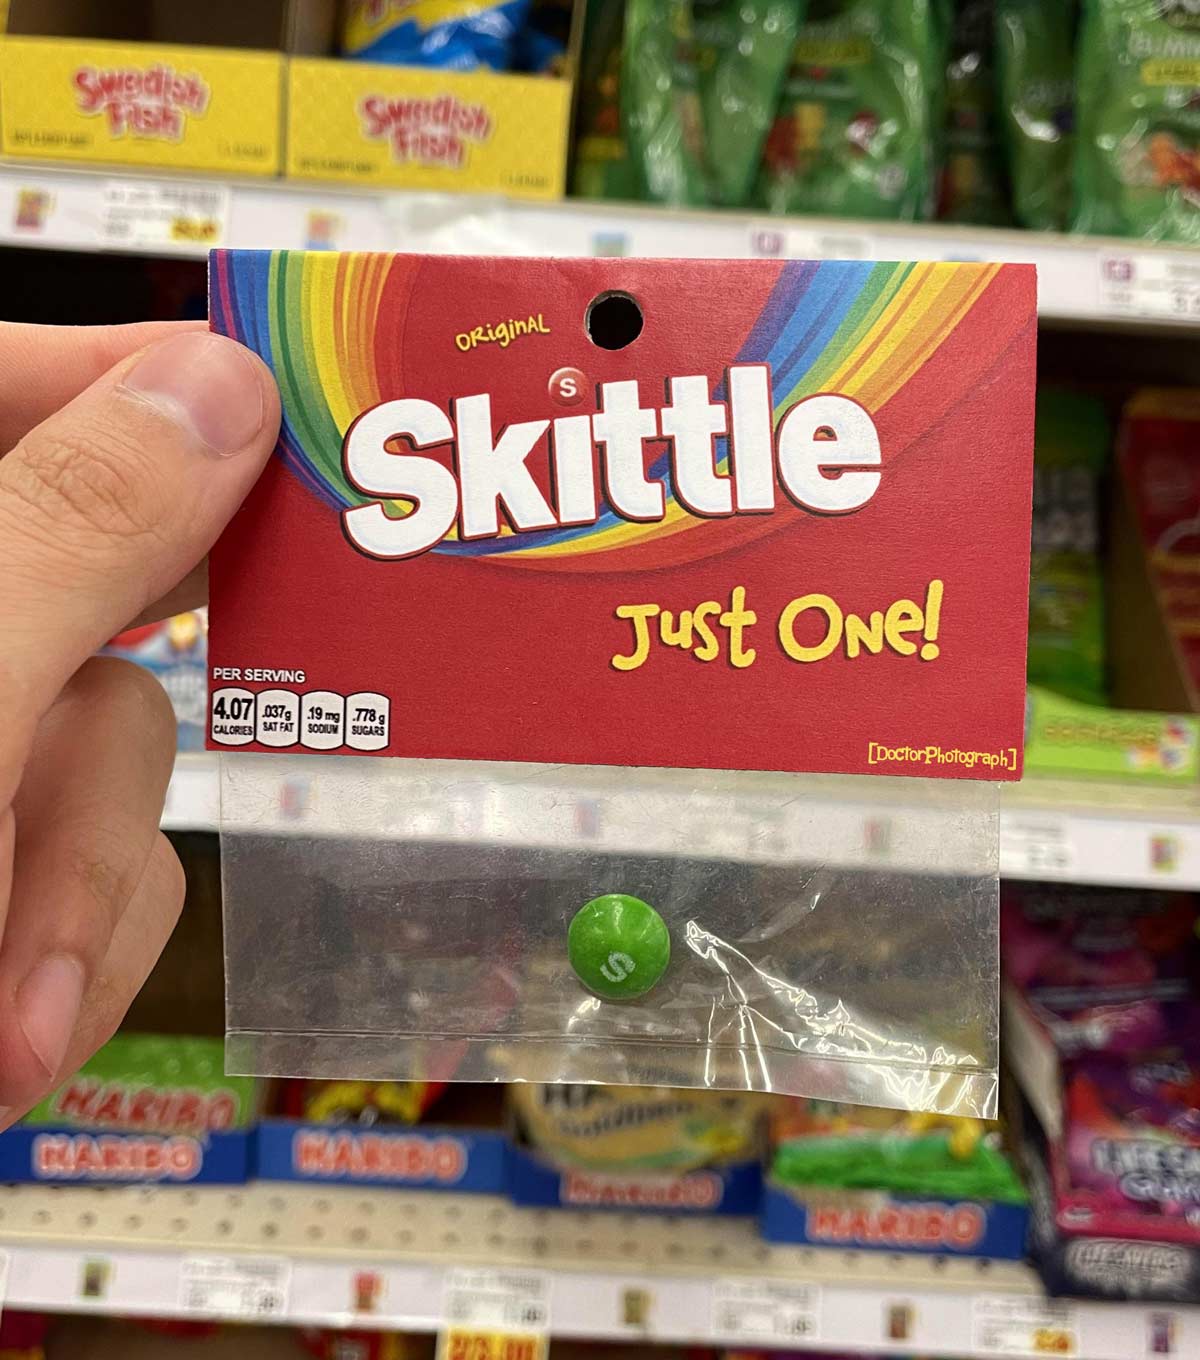 Taste (the green bit of) the rainbow